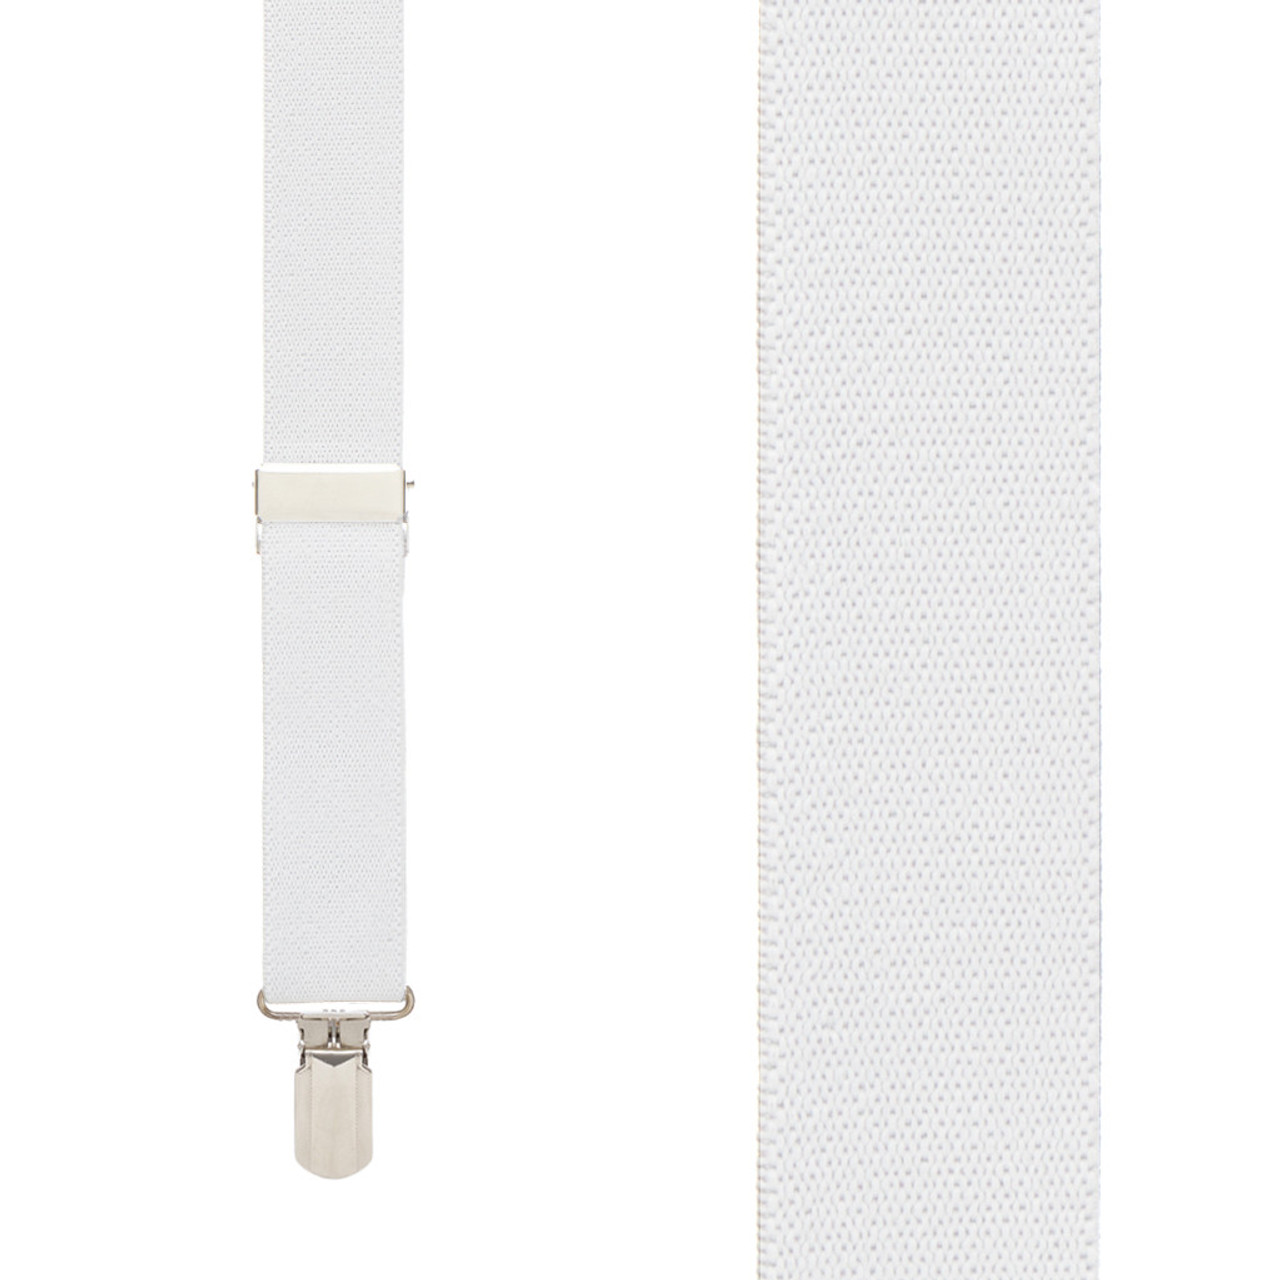 1-Inch Solid Small Pin Clip Suspenders